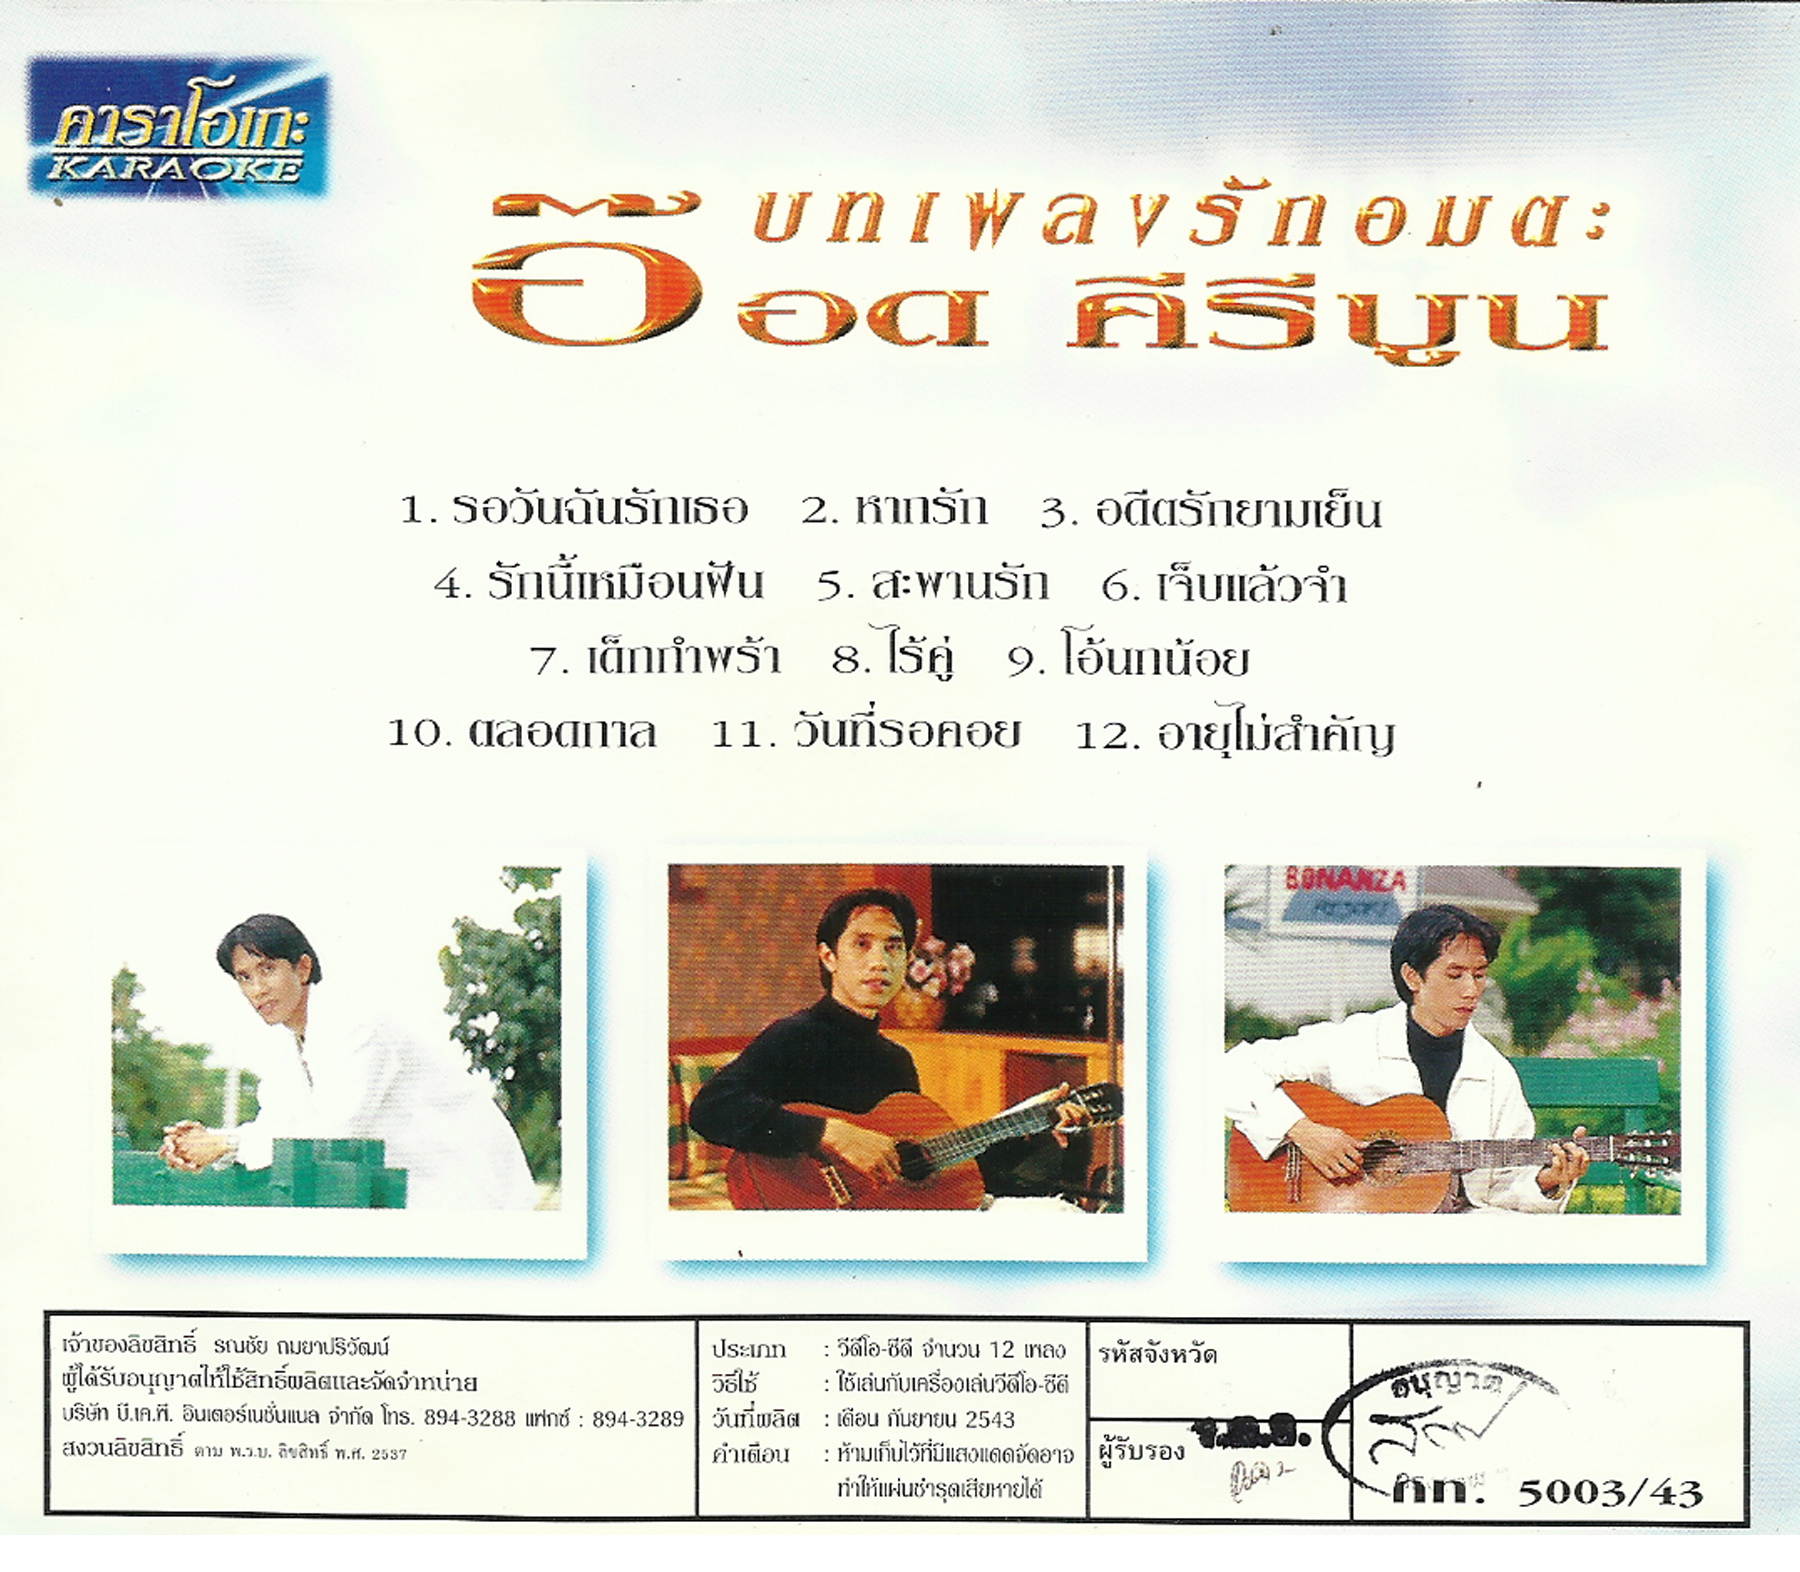 594 VCD Karaoke อ๊อด คีรีบูน บทเพลงรักอมตะ [2543]